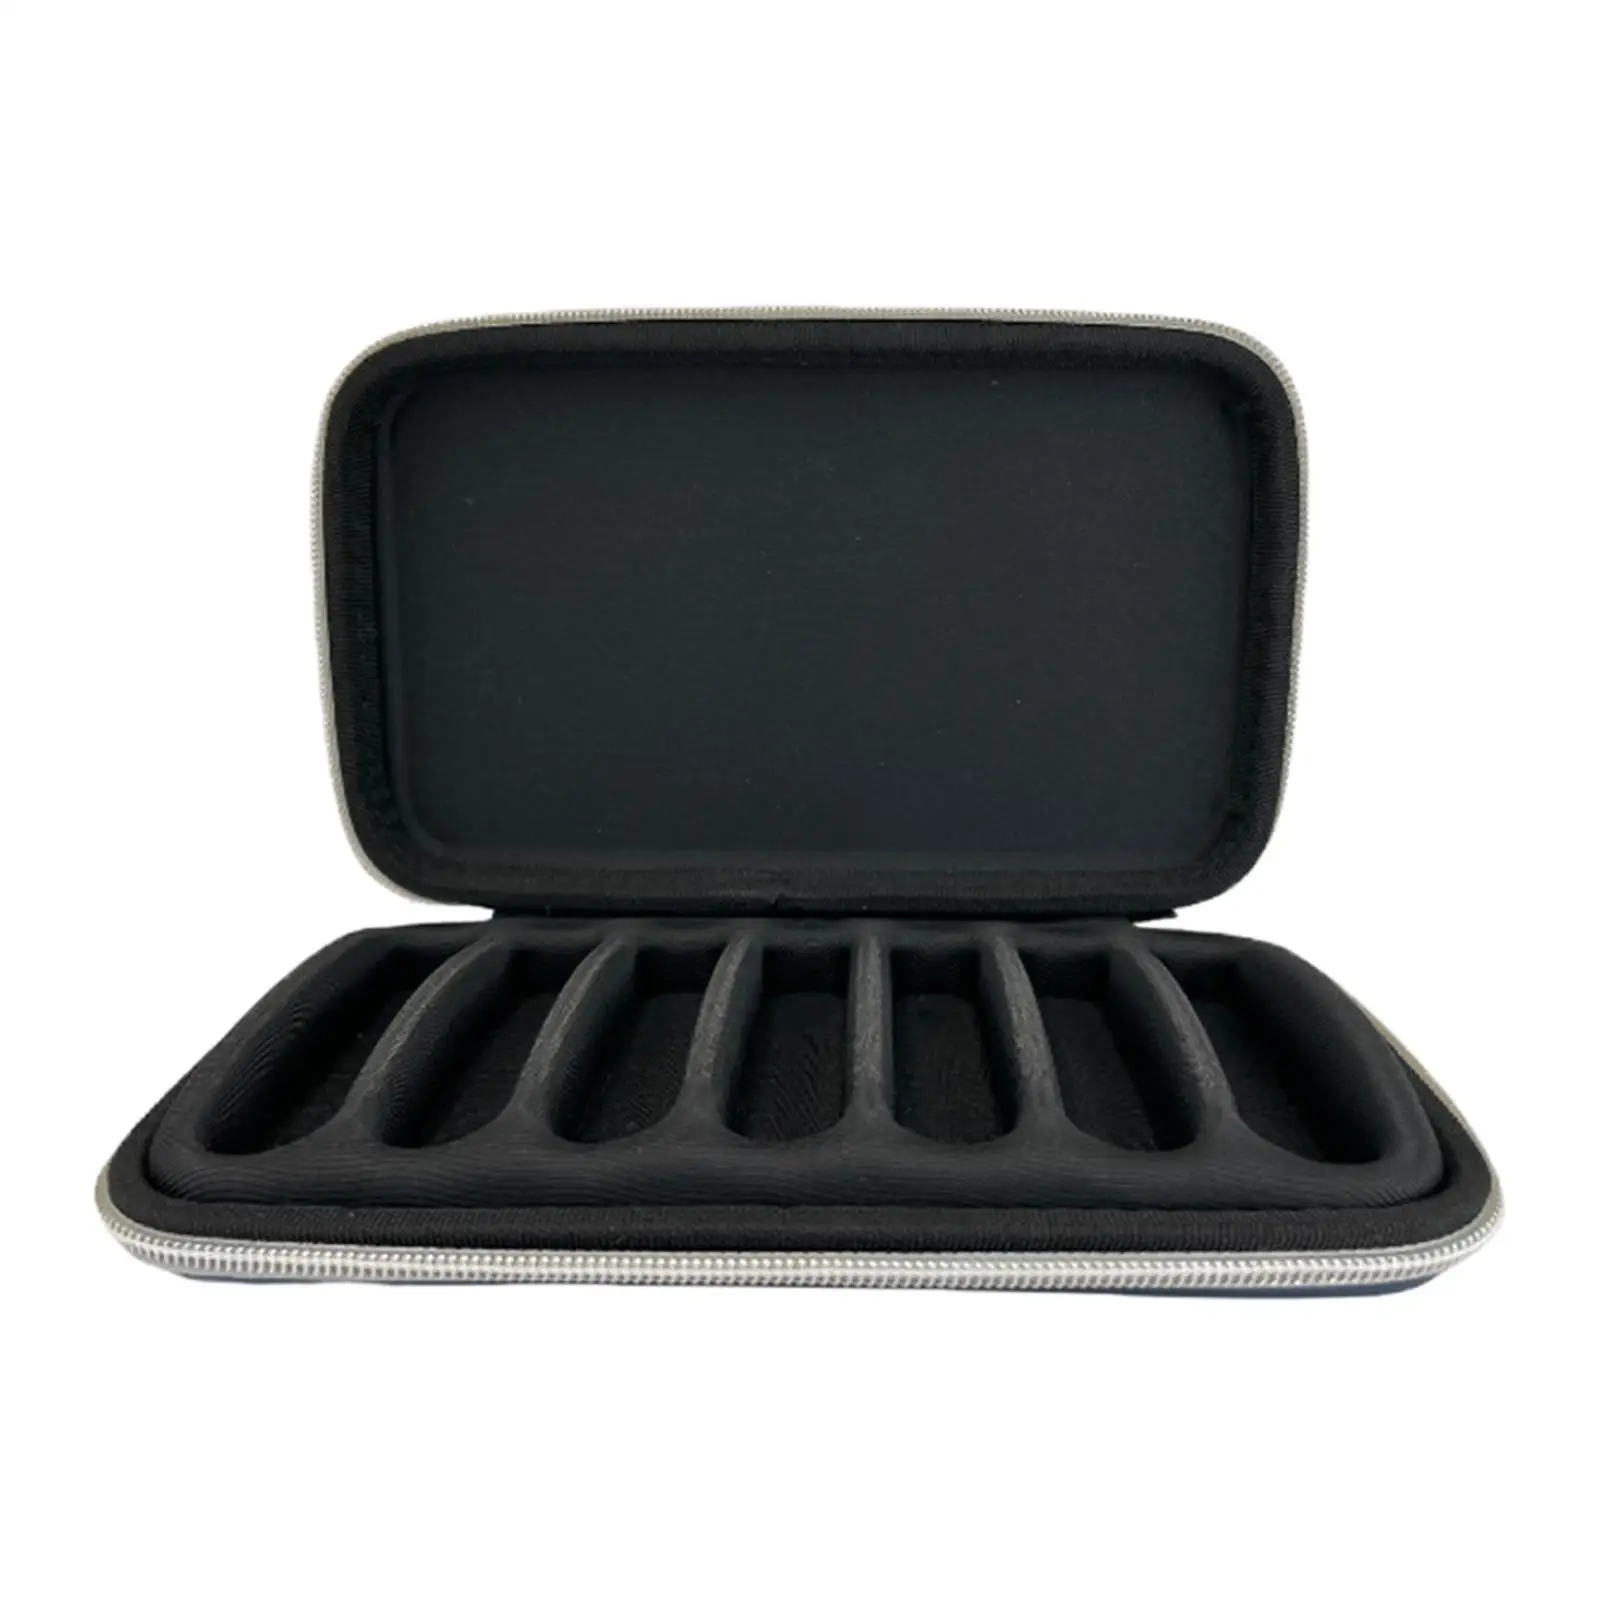 Tooyful Portable EVA 10 Holes Harmonica Storage Case Bag Mouth Organ Box Container Black - Hold 7pcs Harmonicas